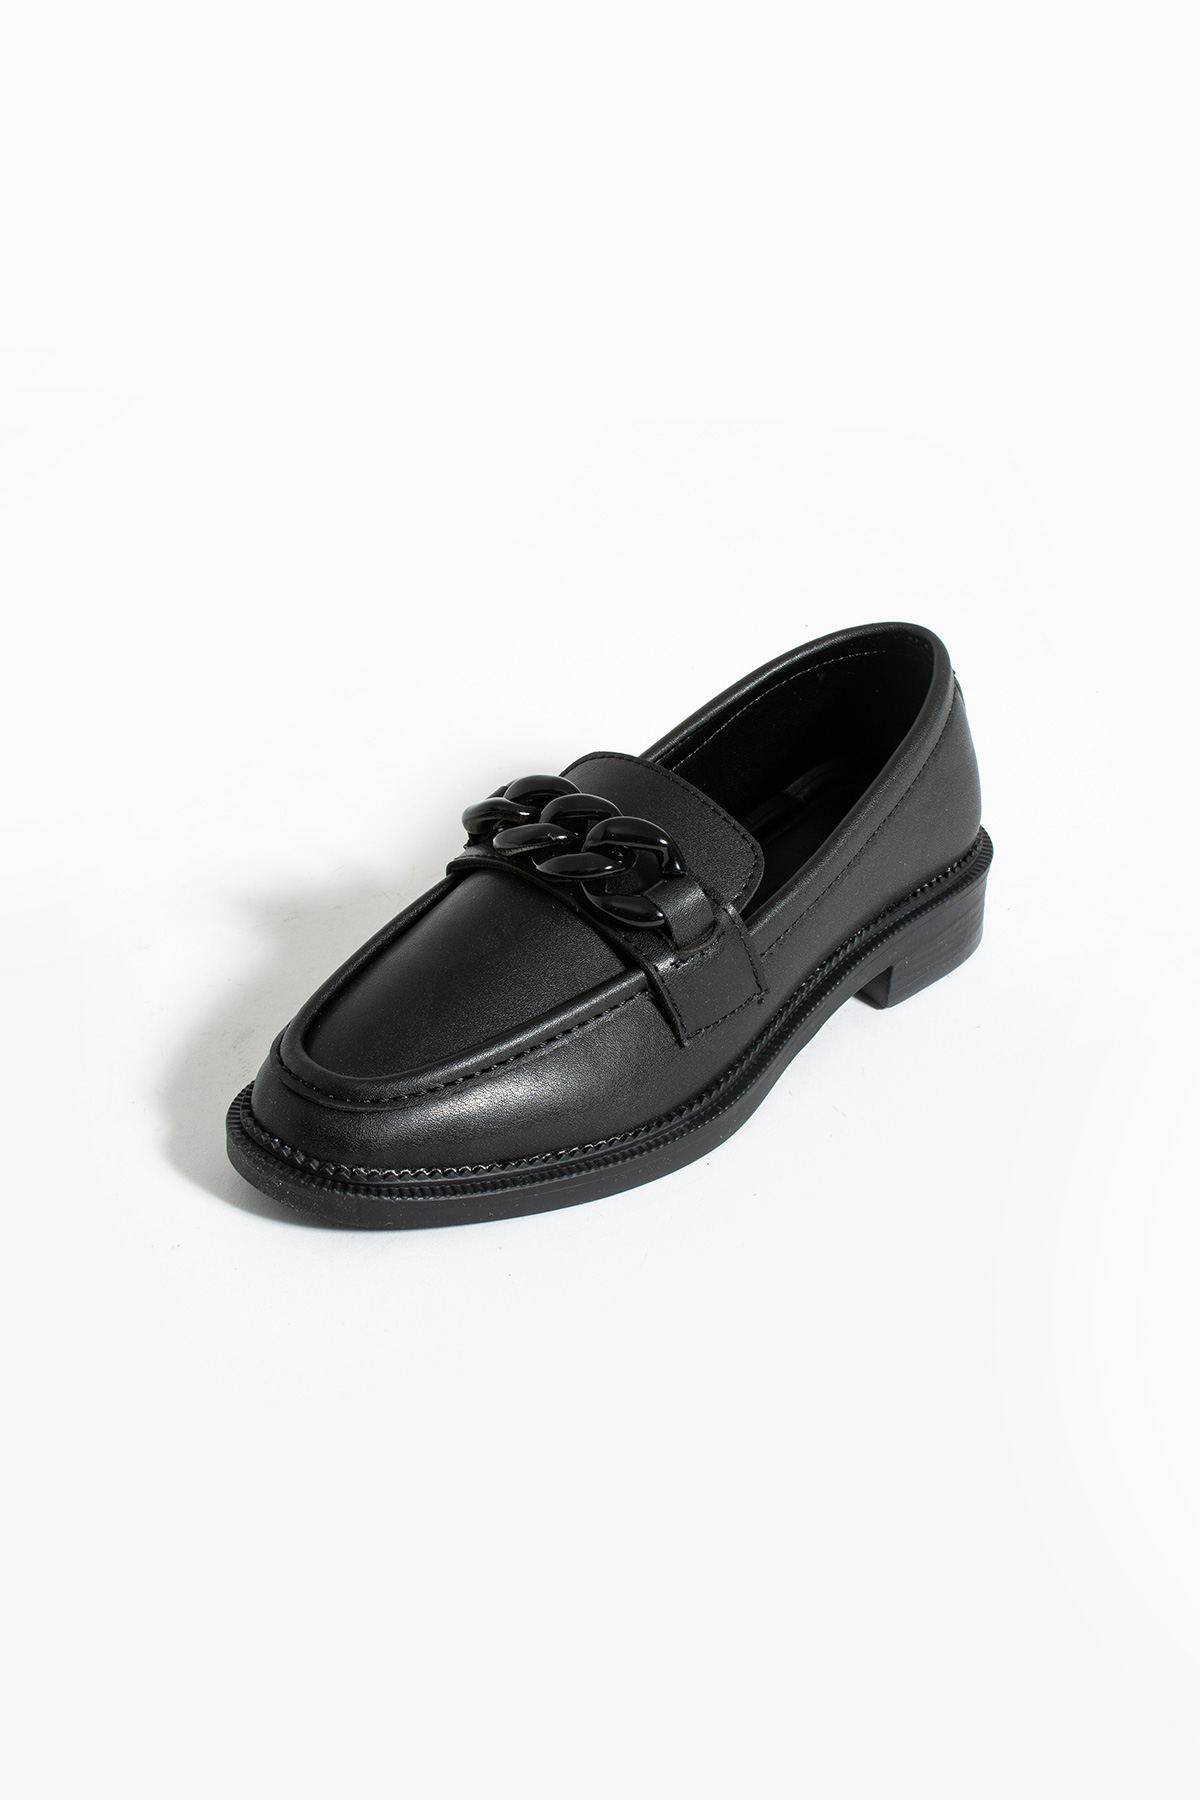 Pembe Potin Rahat Taban Toka Detaylı Loafer Kadın Ayakkabı 61-718-23 - Siyah